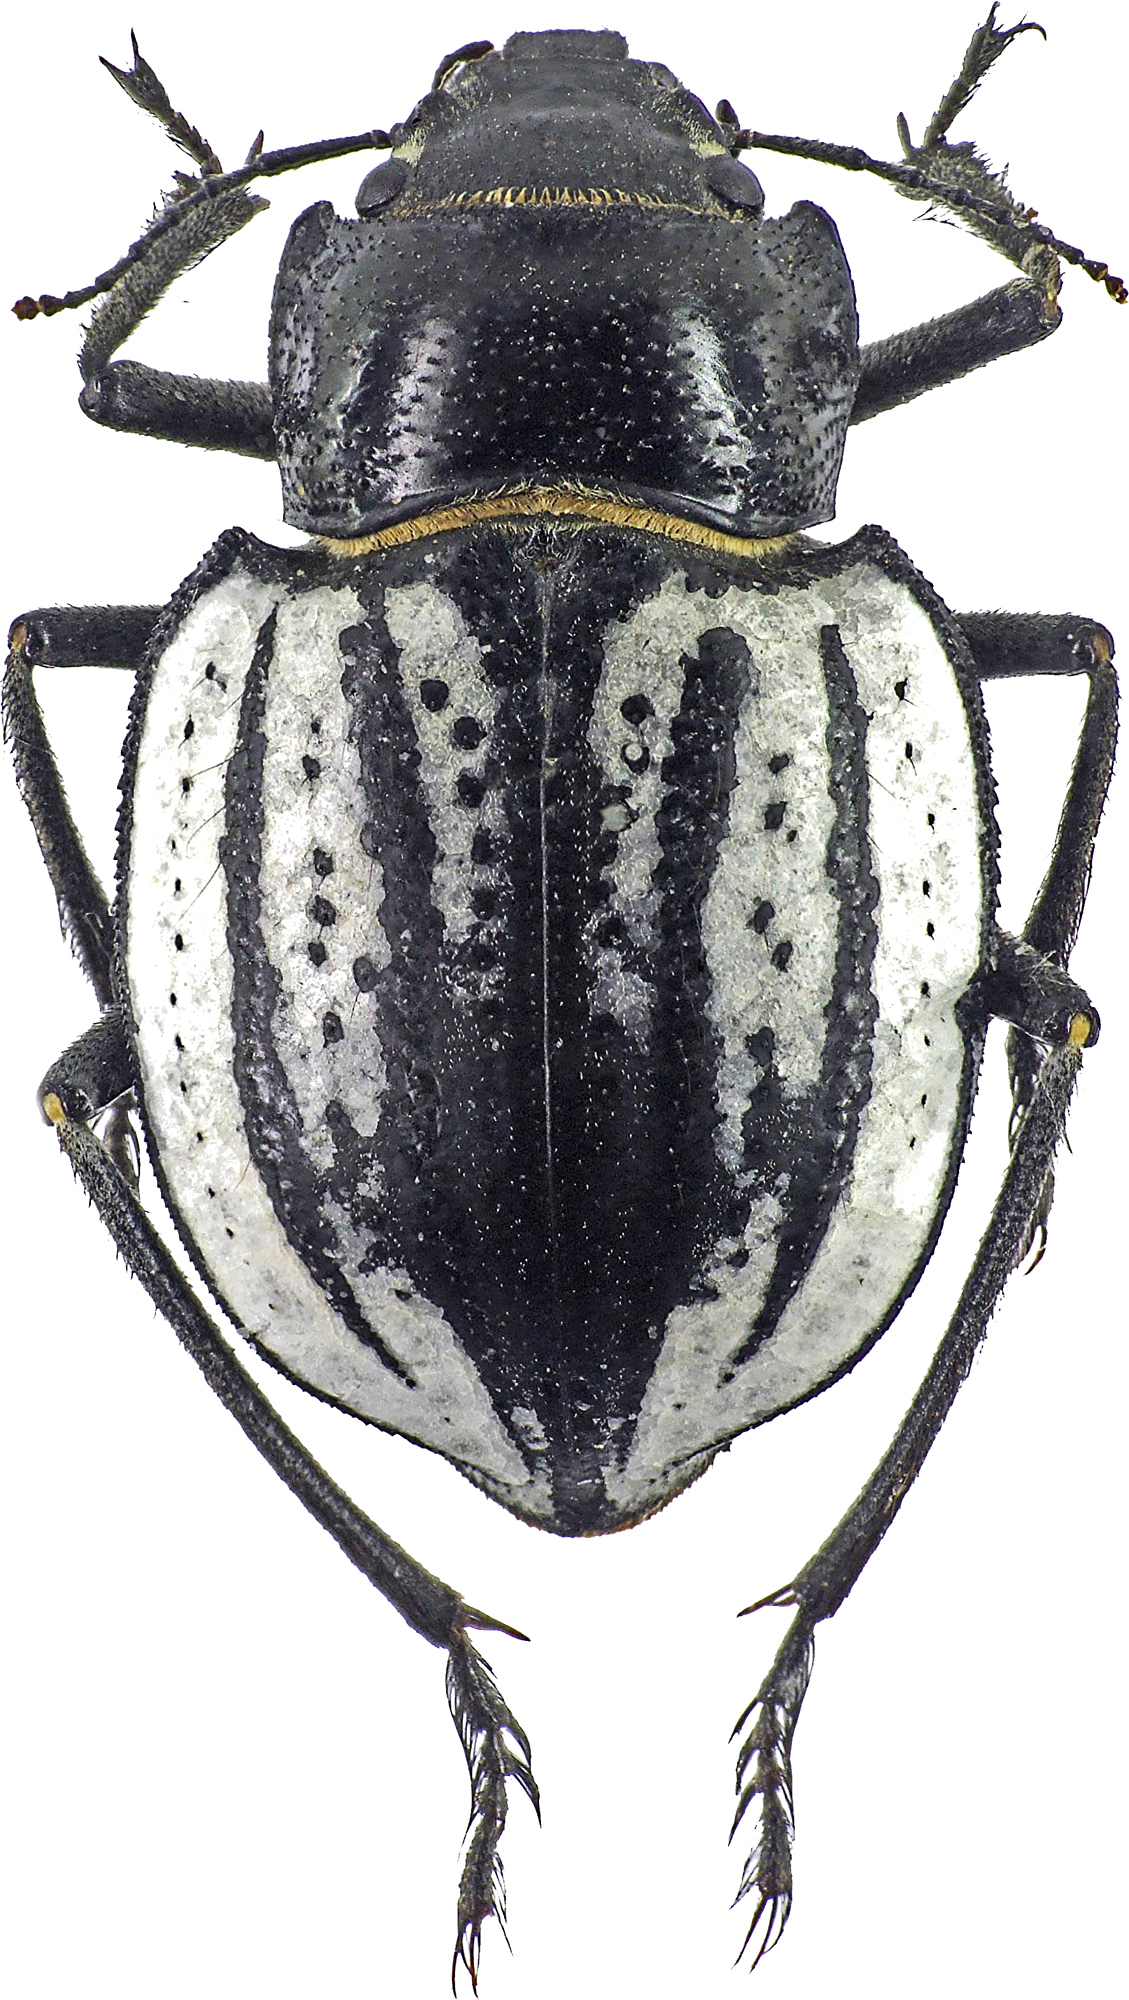 Sternodes caspicus 3578 81.jpg